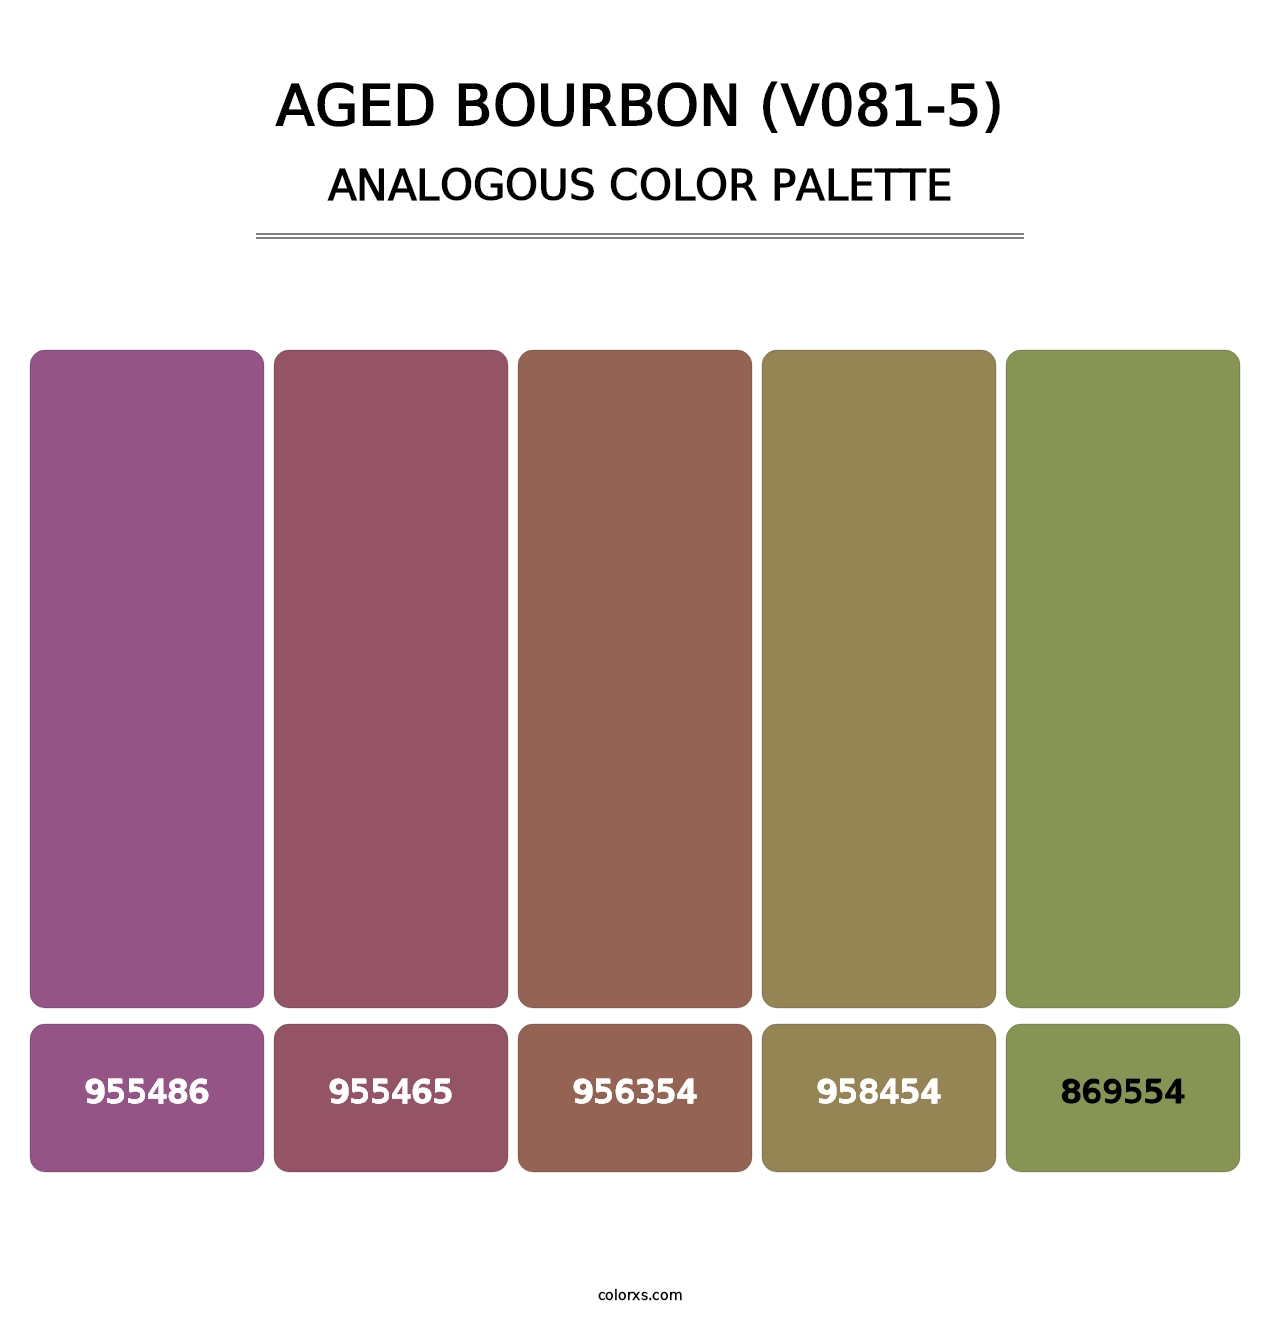 Aged Bourbon (V081-5) - Analogous Color Palette